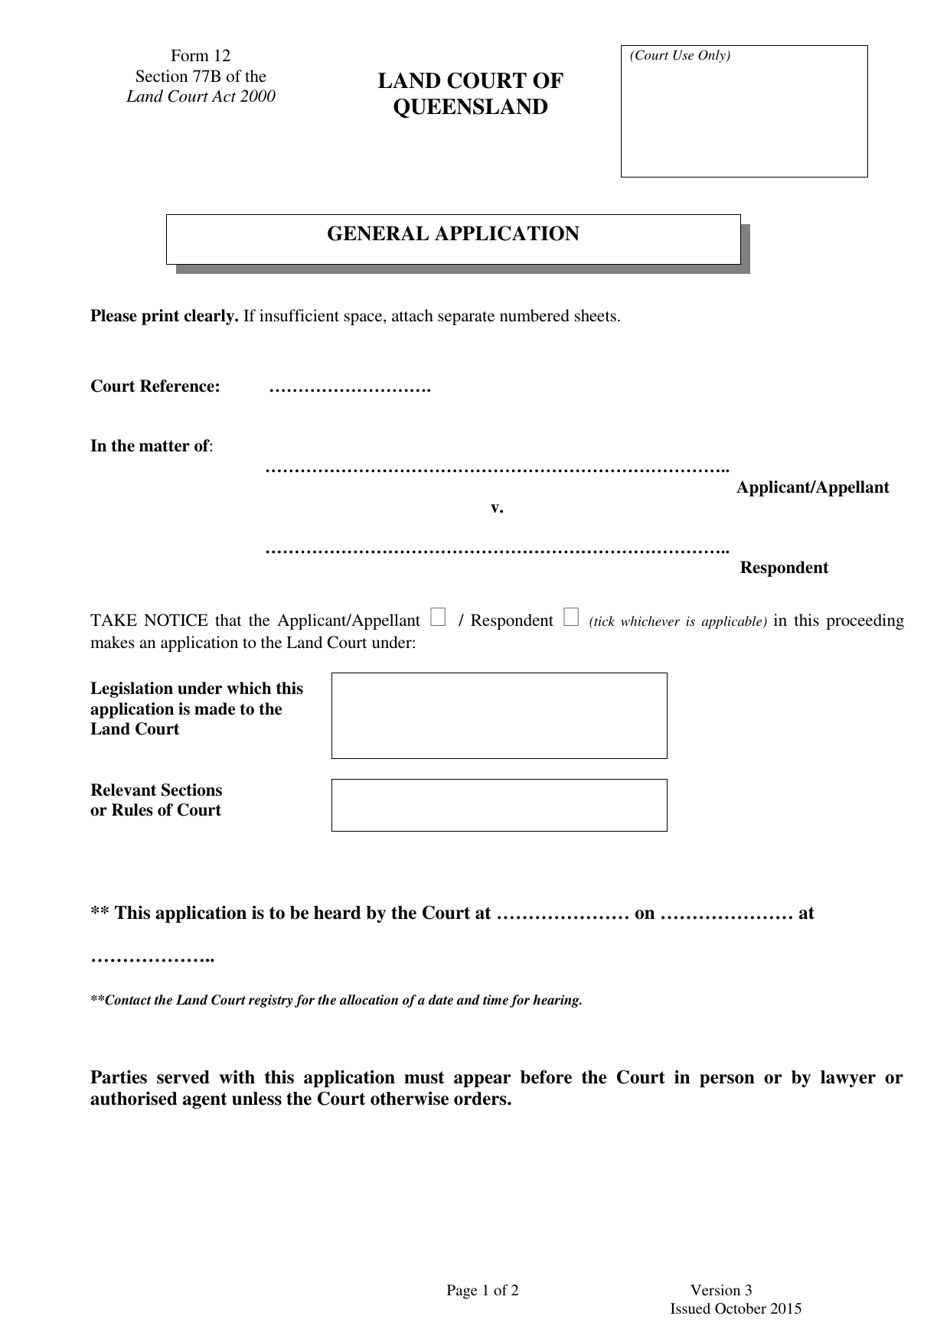 Form 12 General Application - Queensland, Australia, Page 1